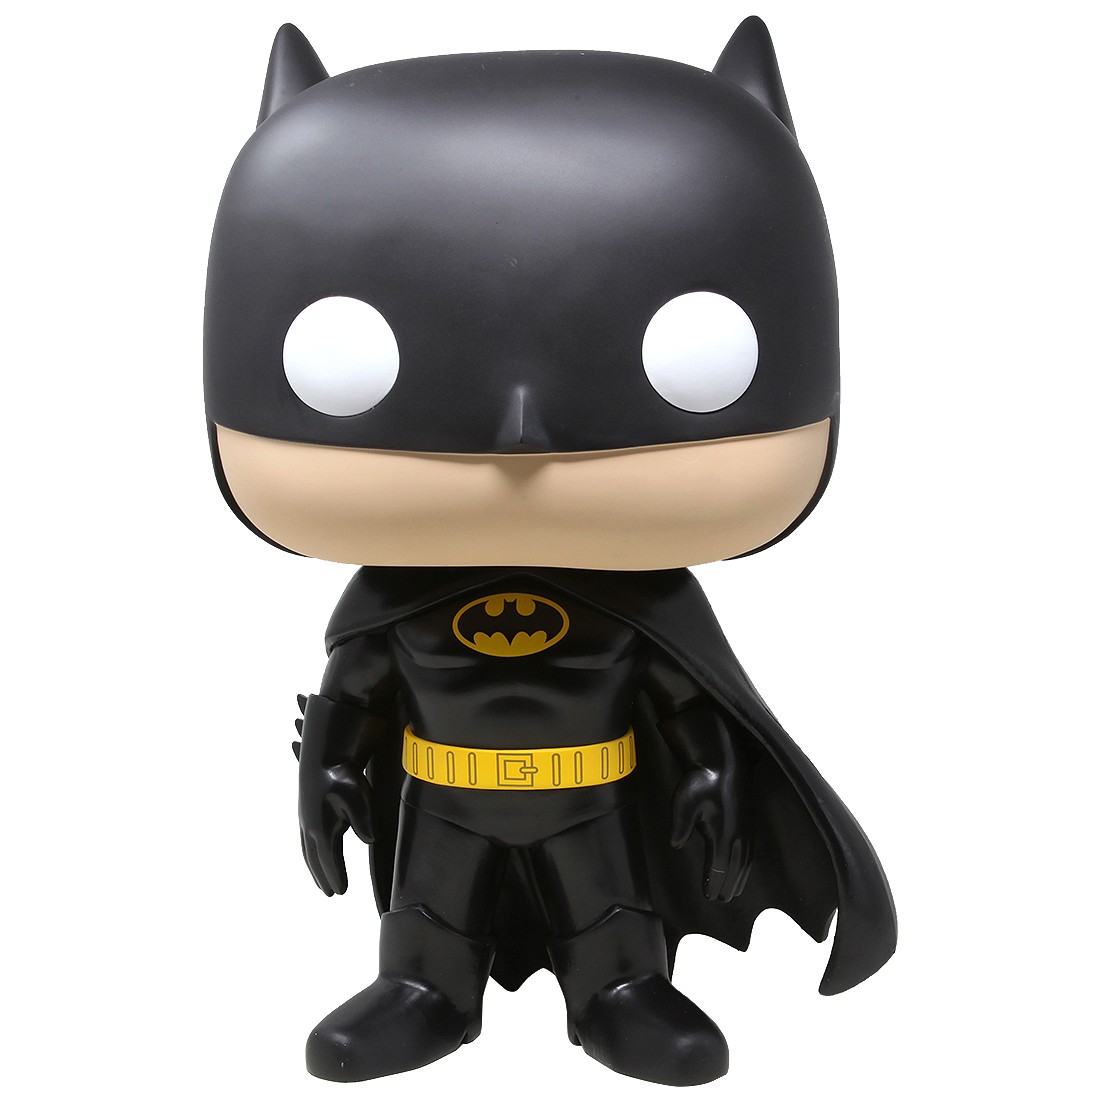 19 inch batman figure